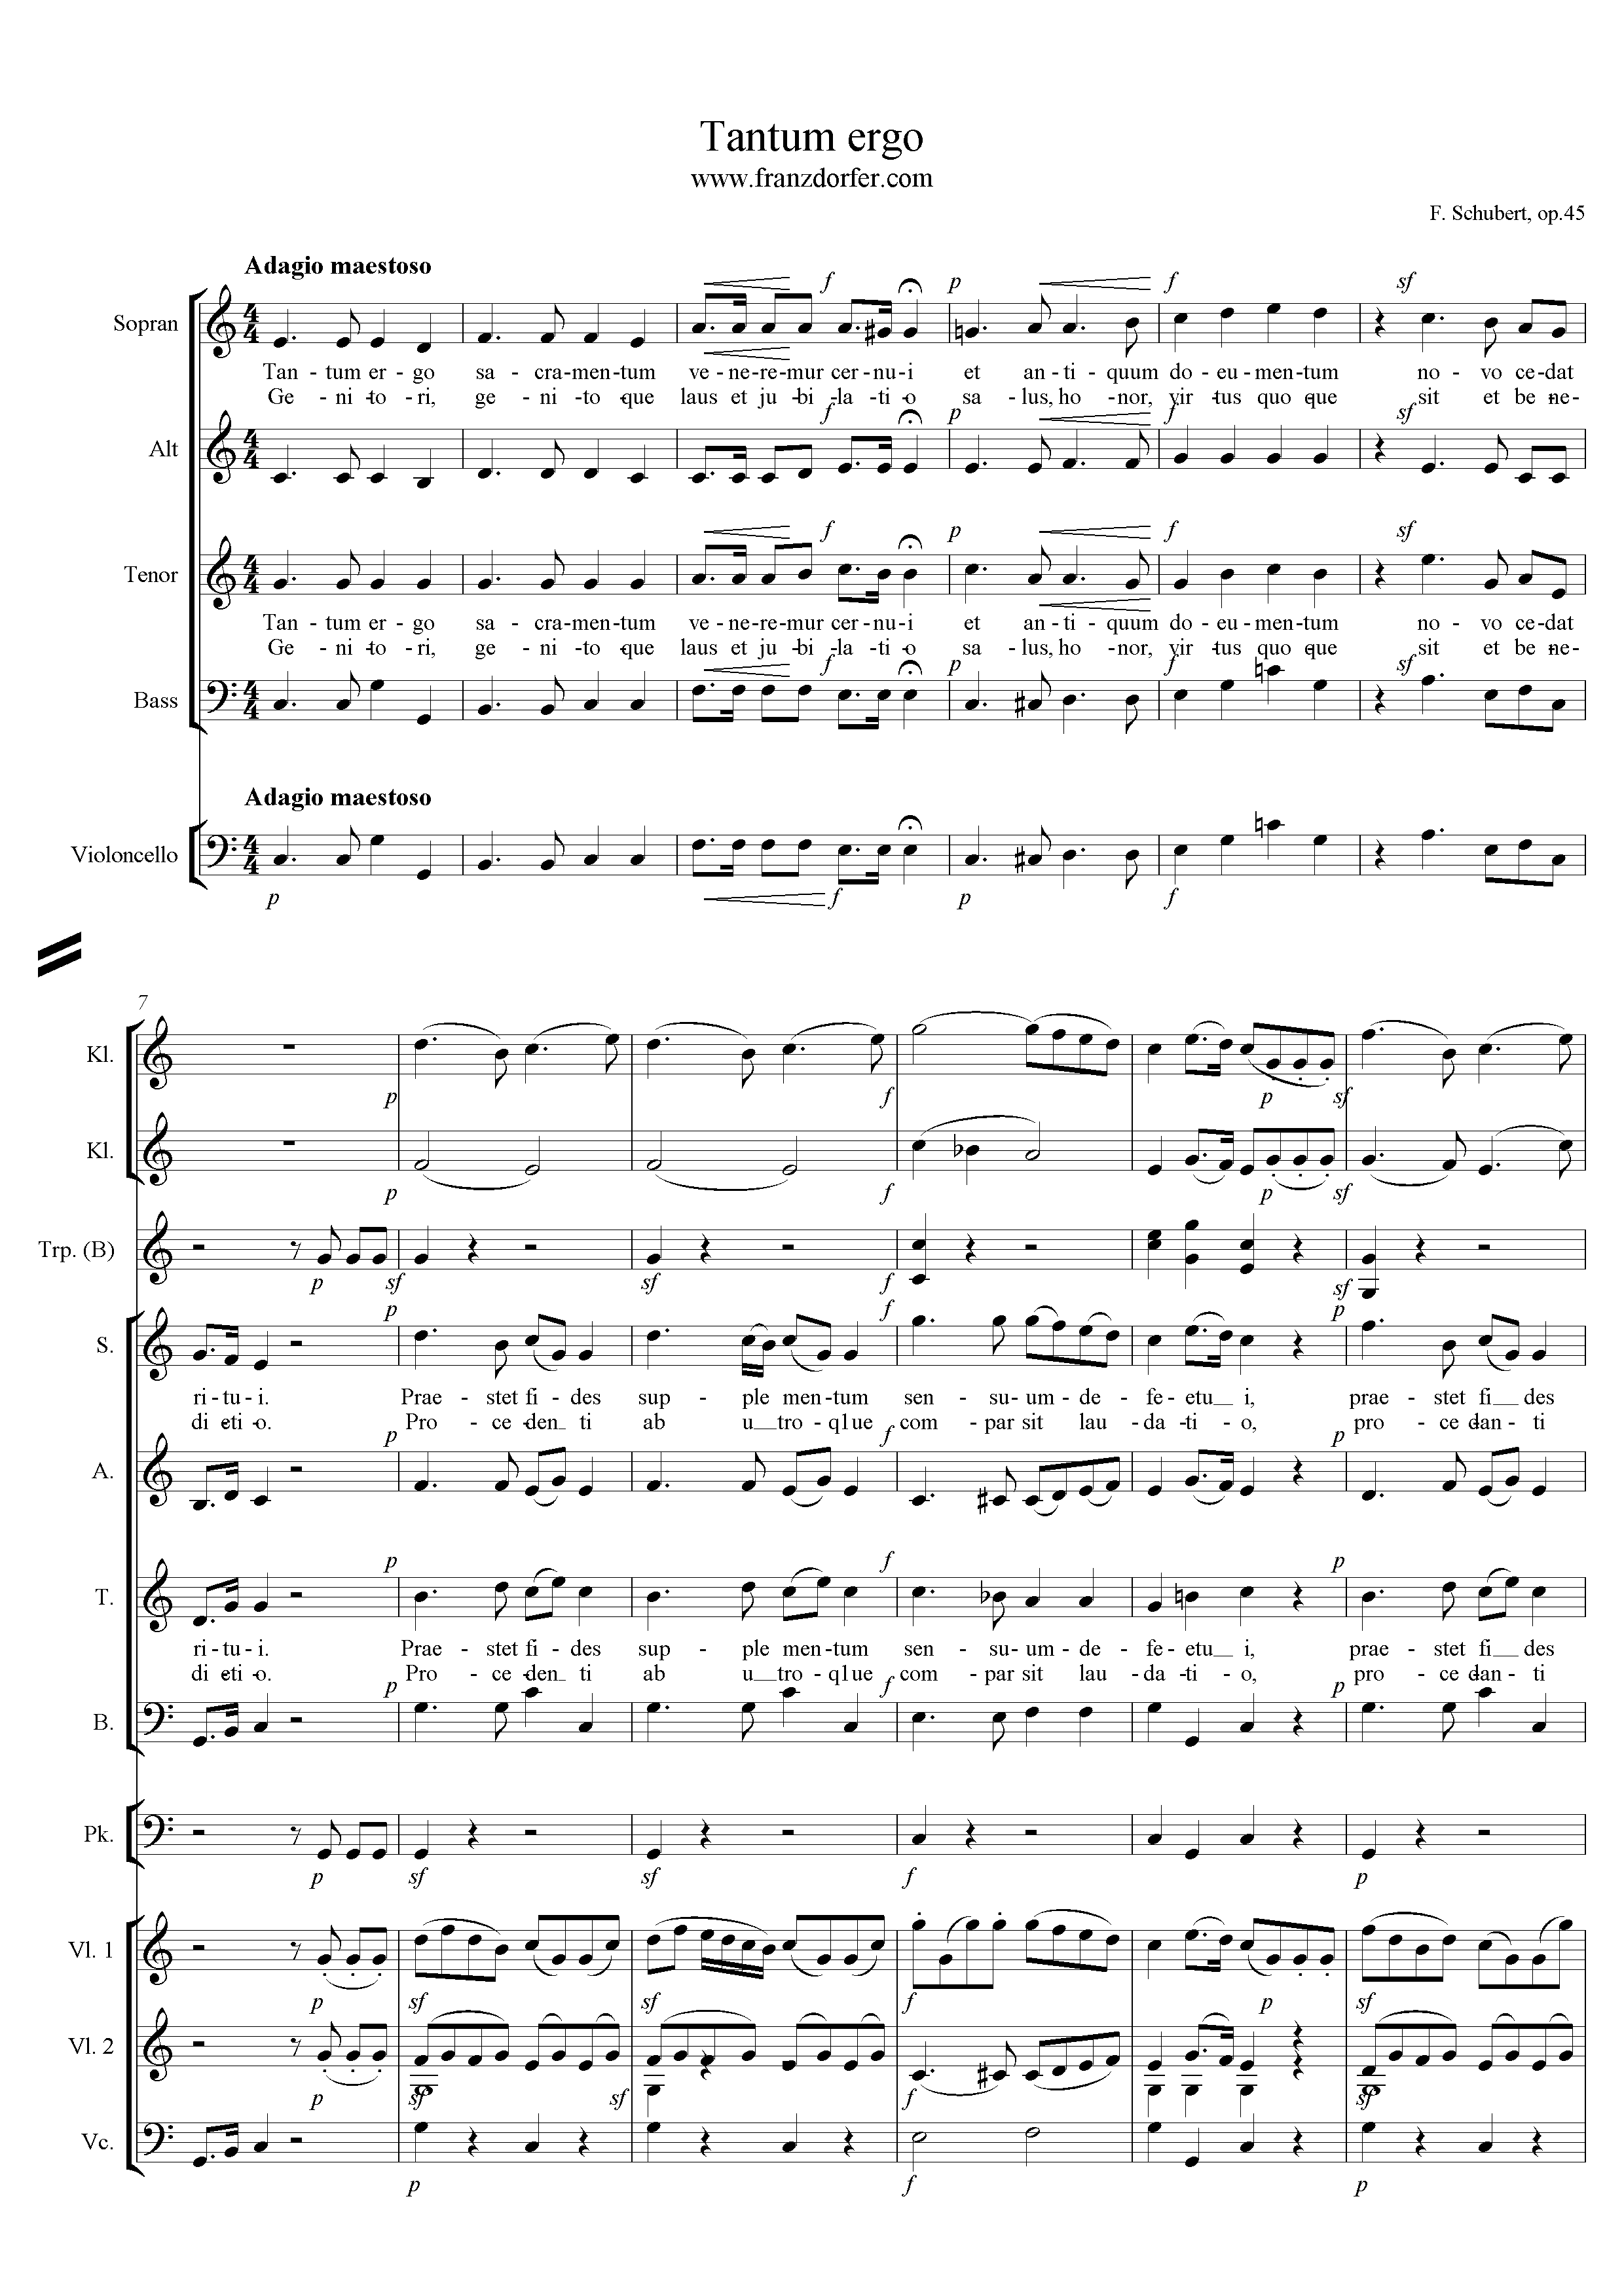 Noten, Tantum ergo, Schubert, op.45